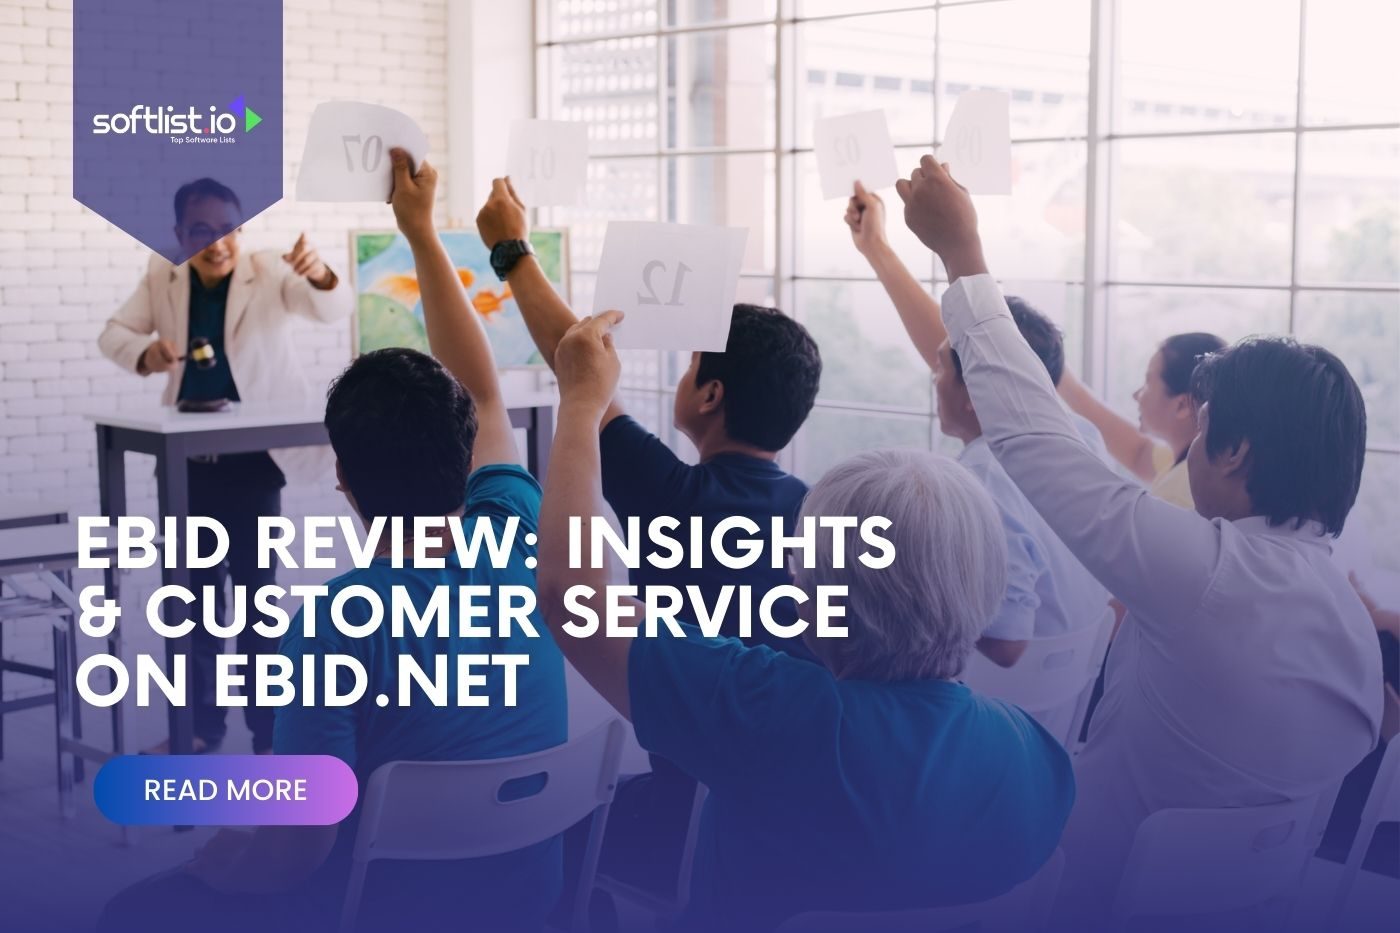 eBid Review: Insights & Customer Service on eBid.net